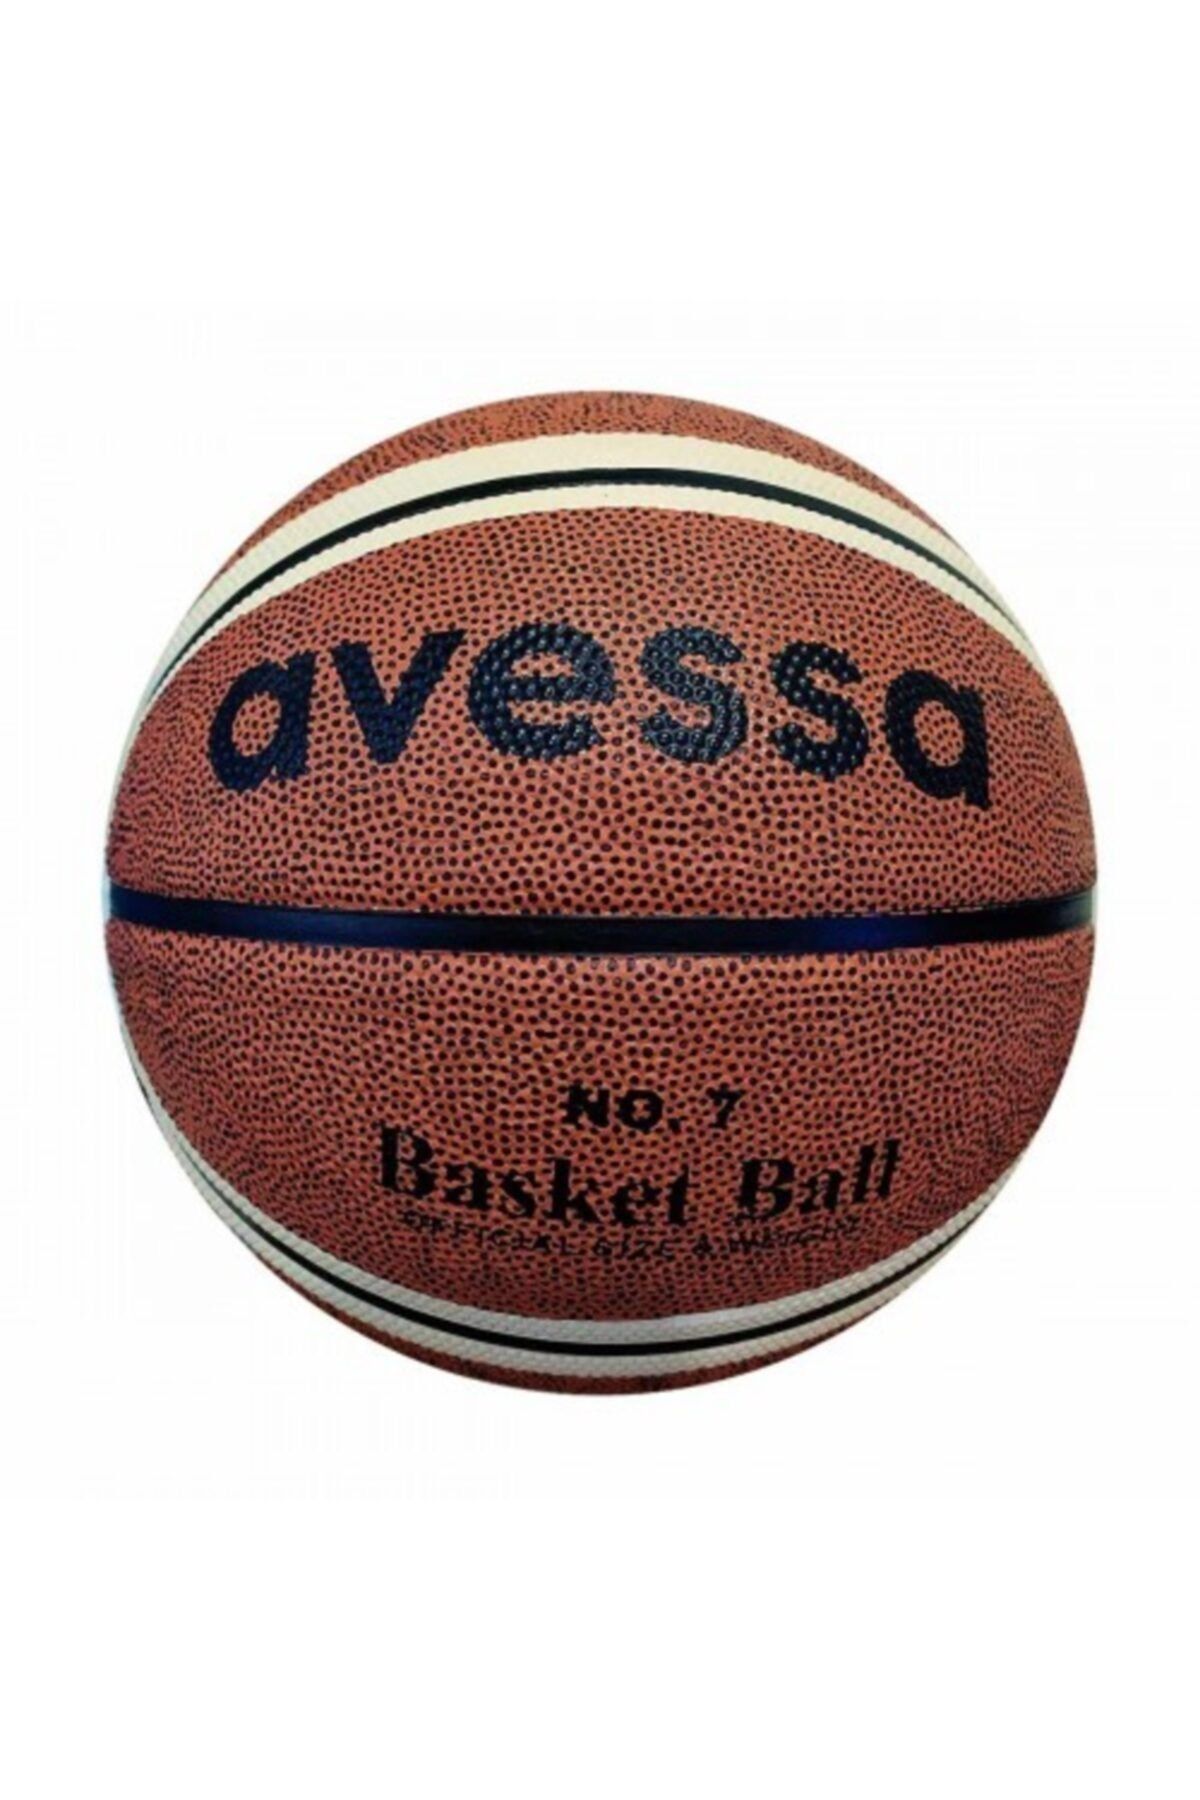 Avessa Bt-170 Kaliteli Basket Topu 7 No